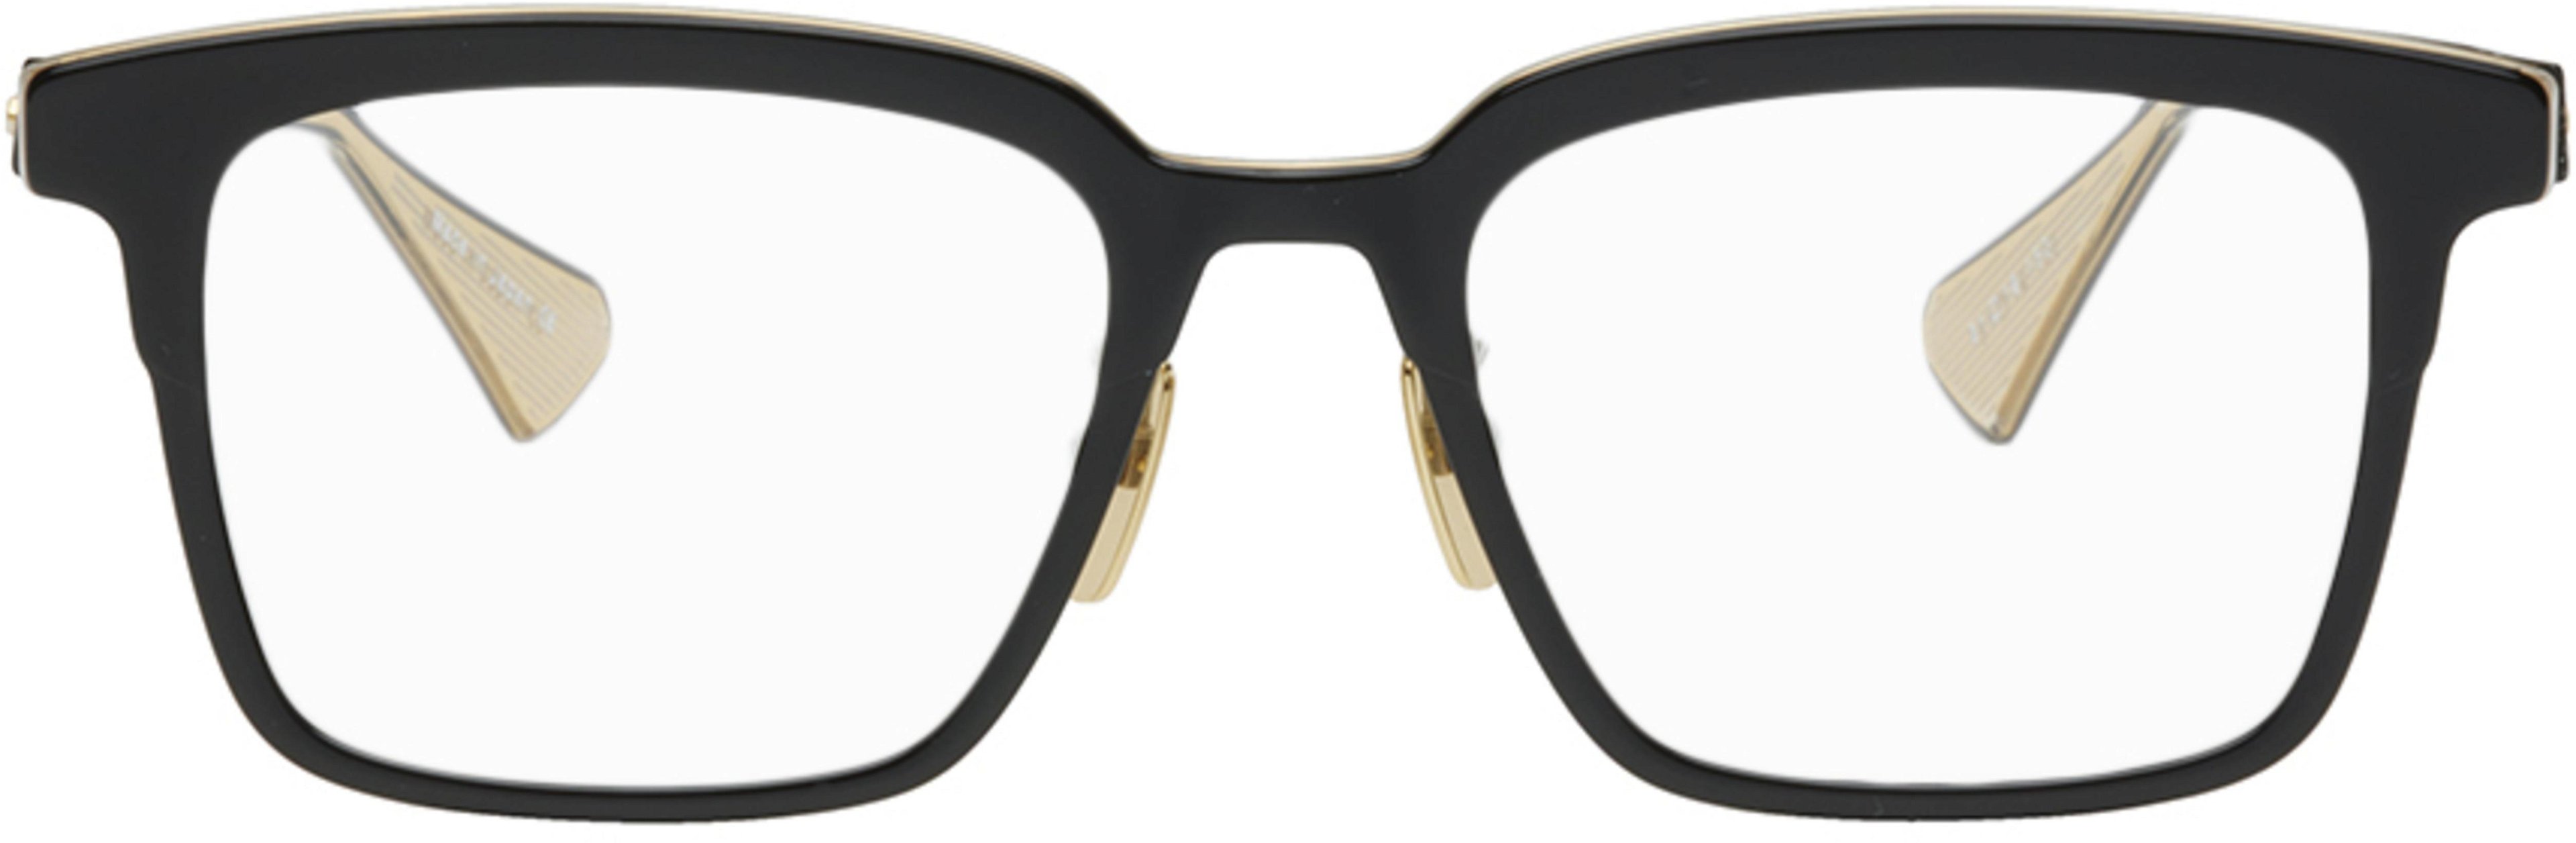 Black & Gold Polymath Glasses by DITA